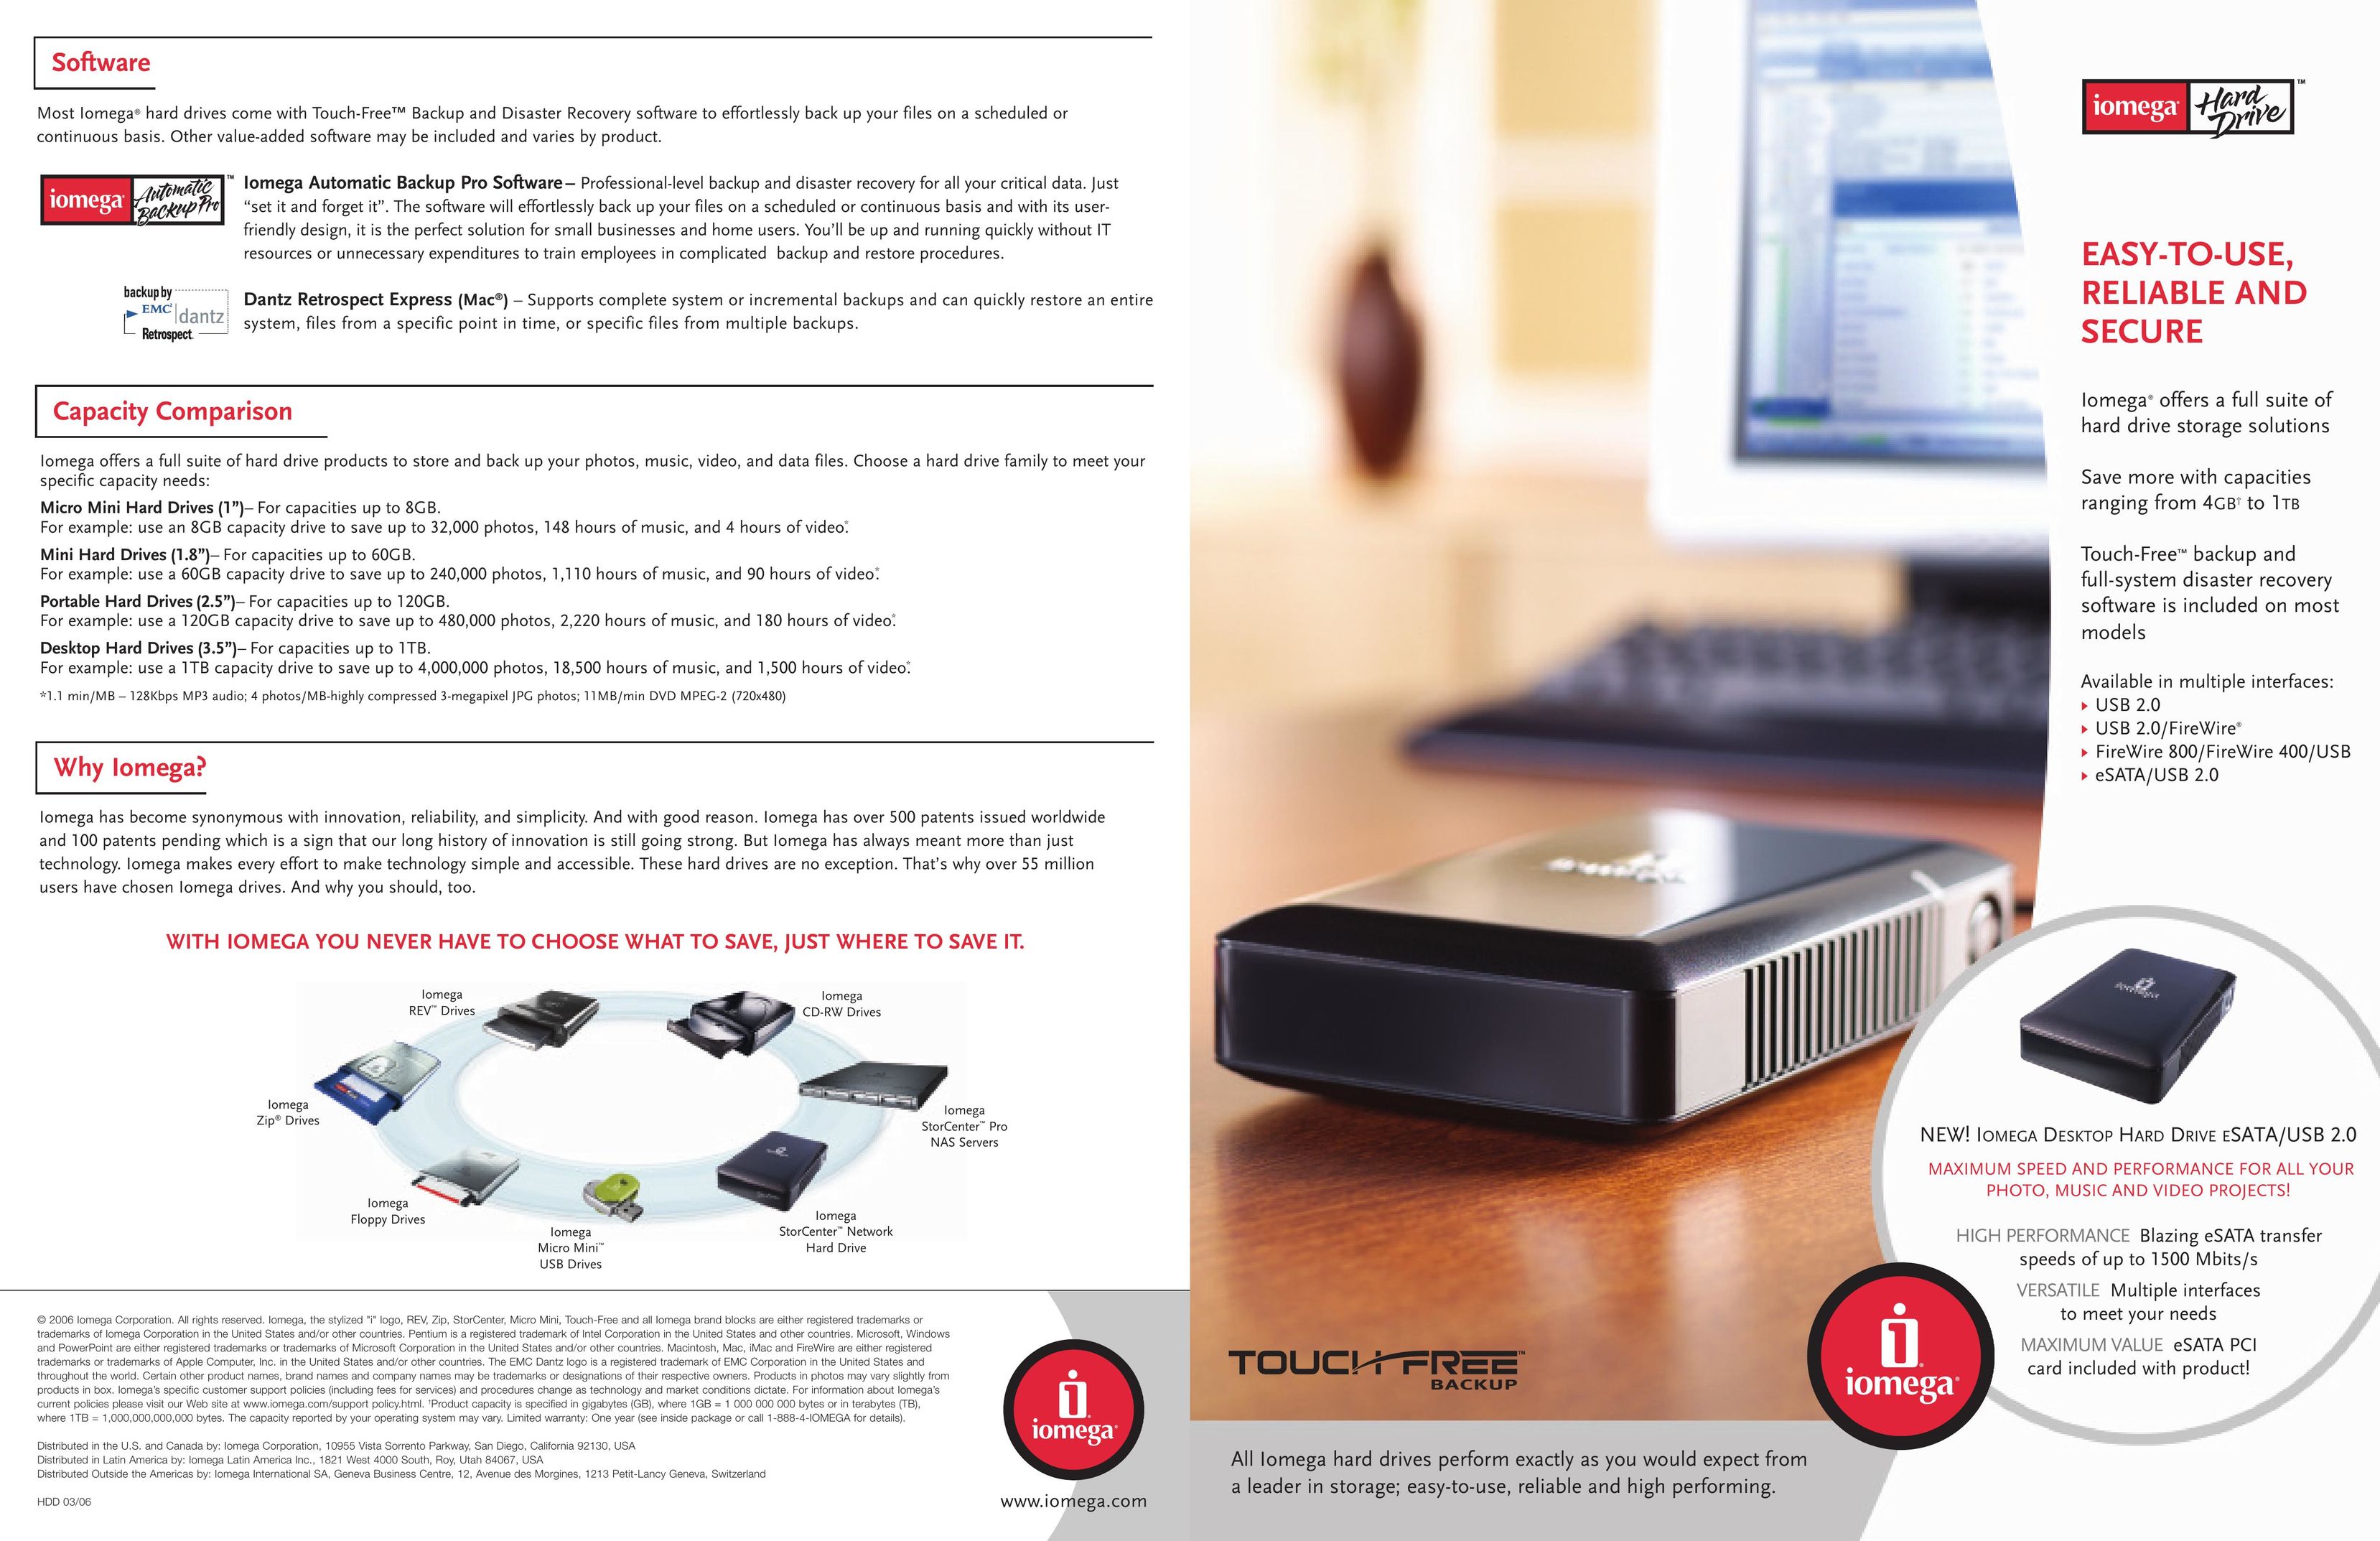 Iomega FireWire 400/USB Computer Drive User Manual